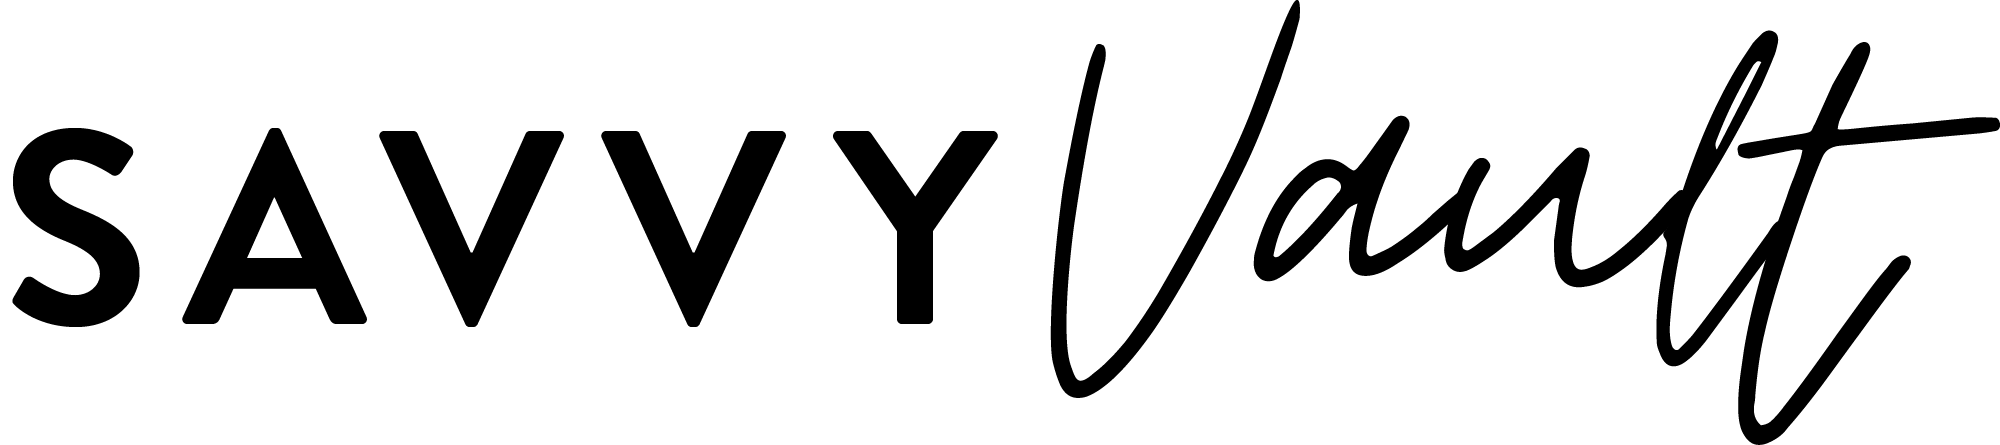 SavvyVault-logo